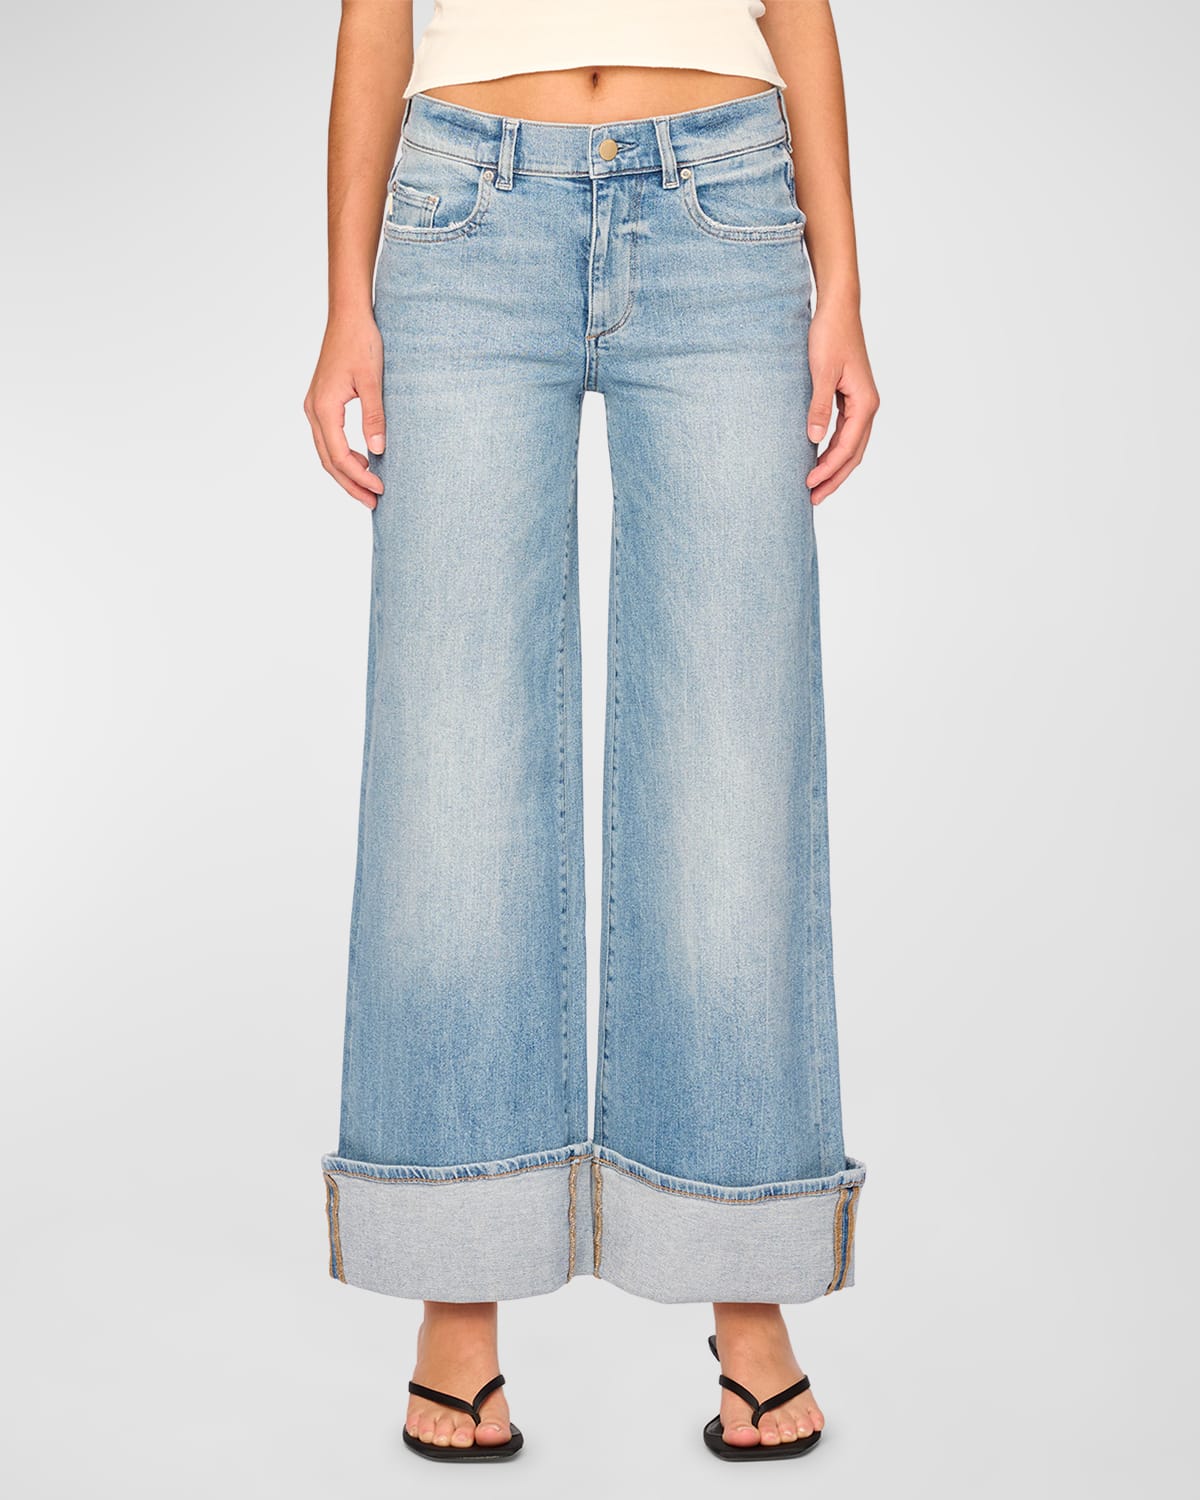 Hepburn Low-Rise Cuffed Jeans